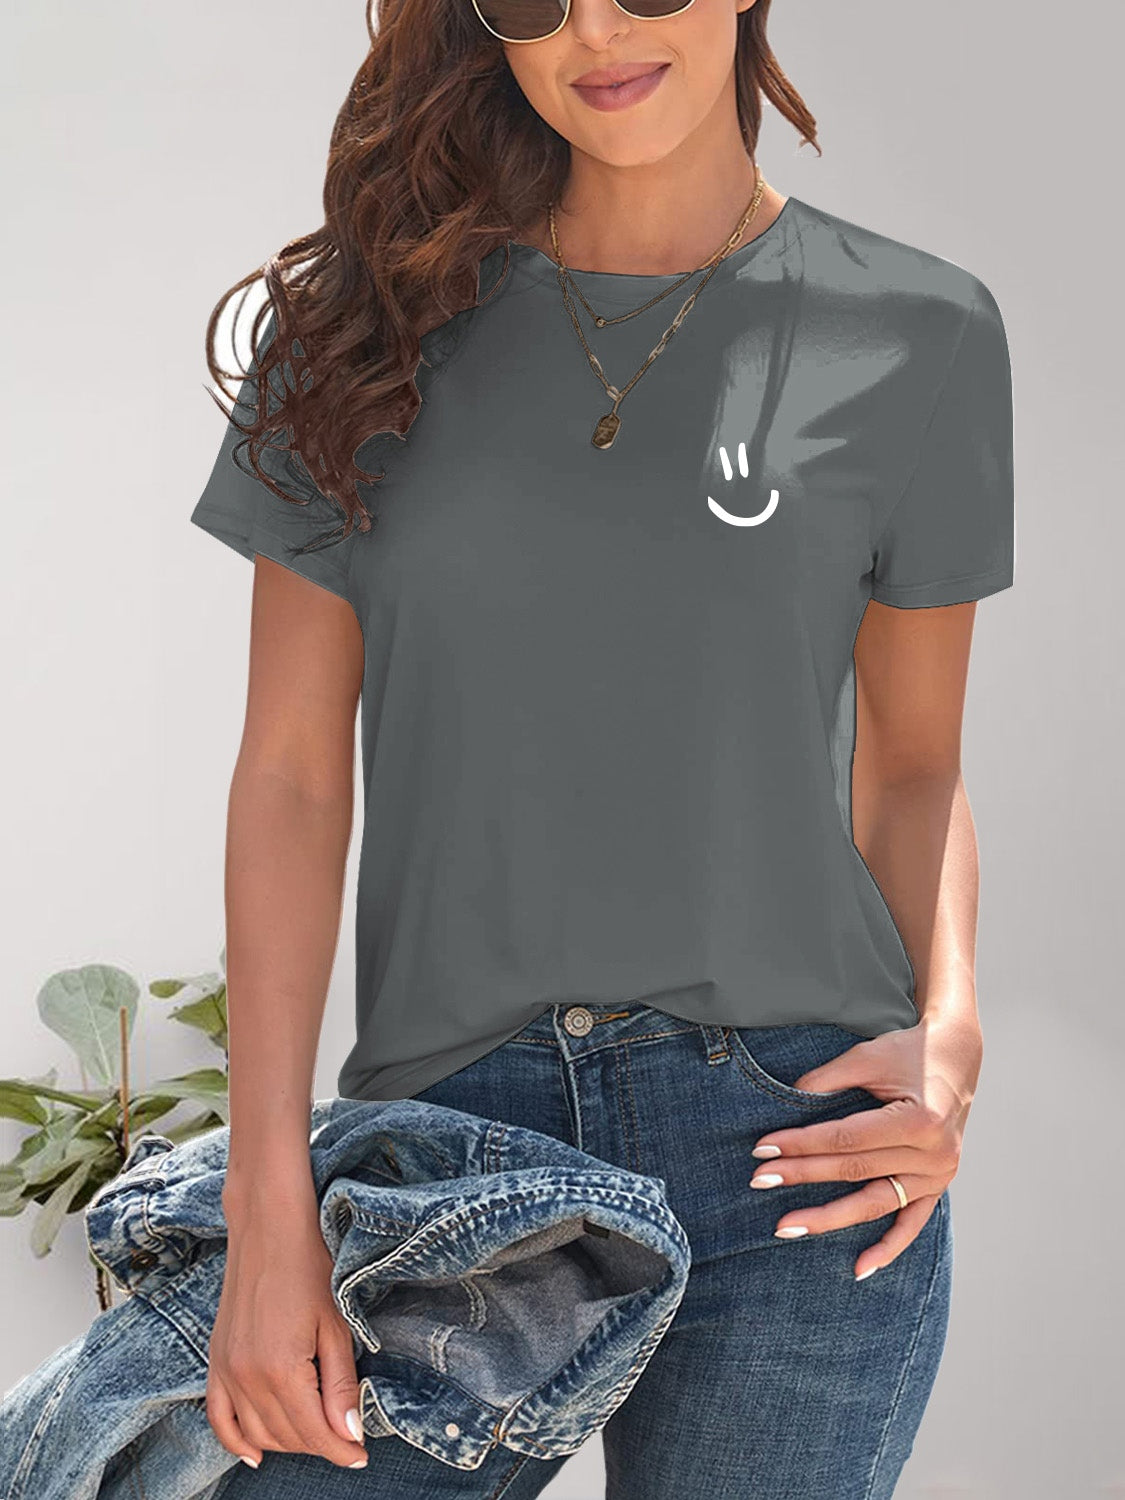 Smile Graphic Round Neck Short Sleeve T-Shirt